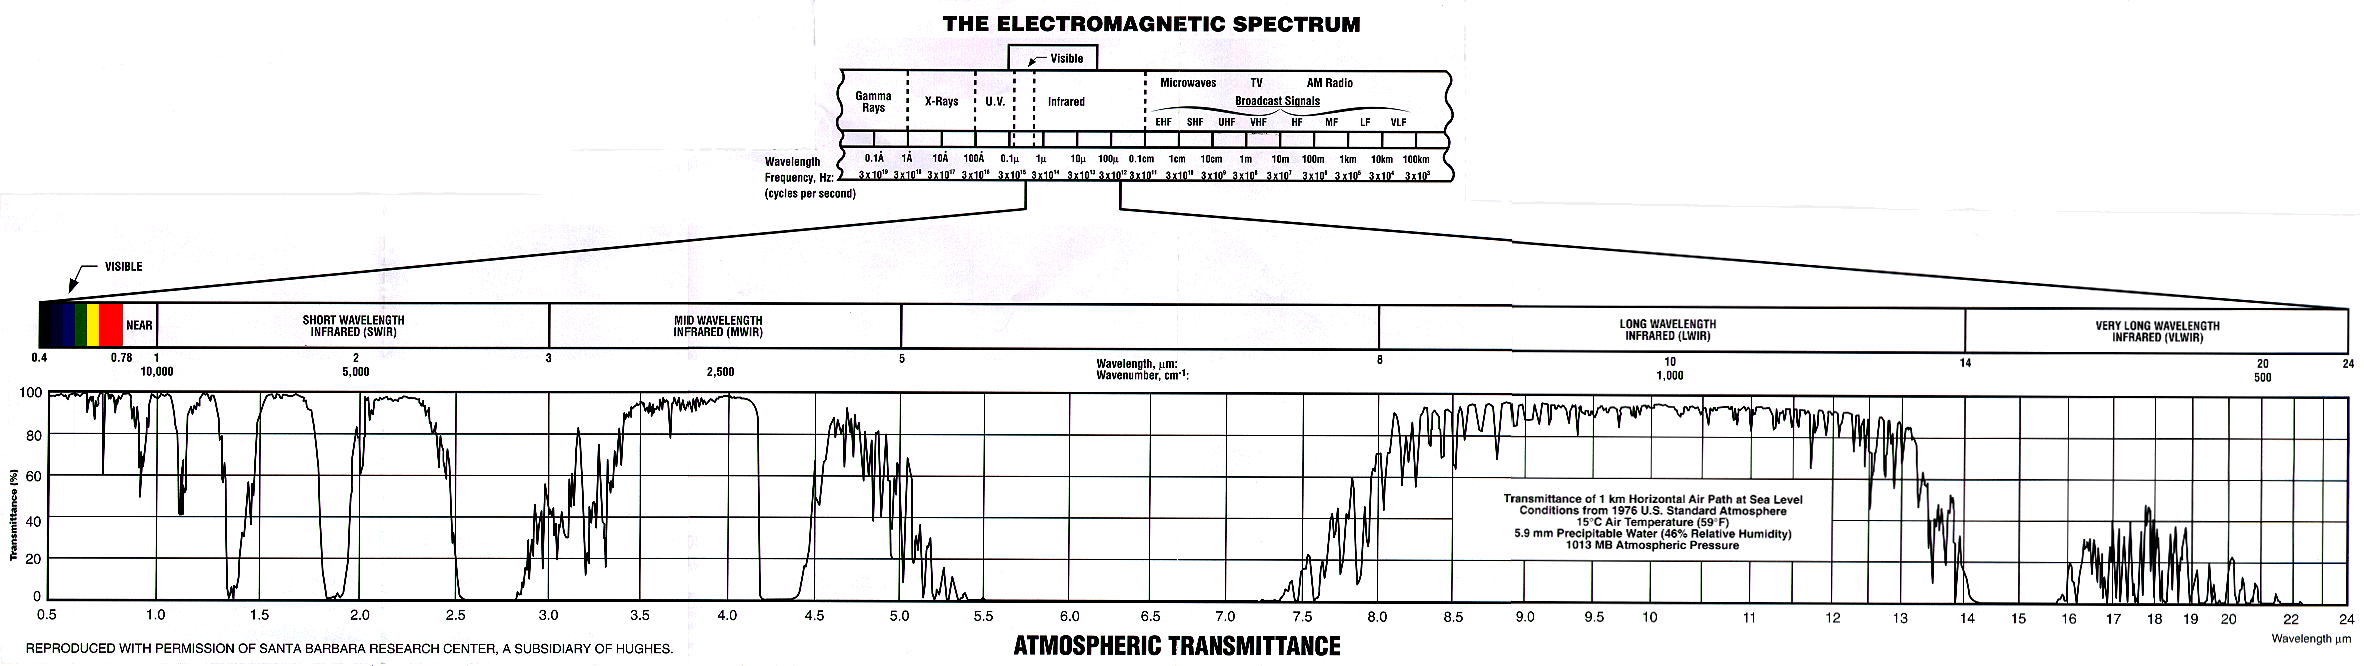 Atmospheric Transmission